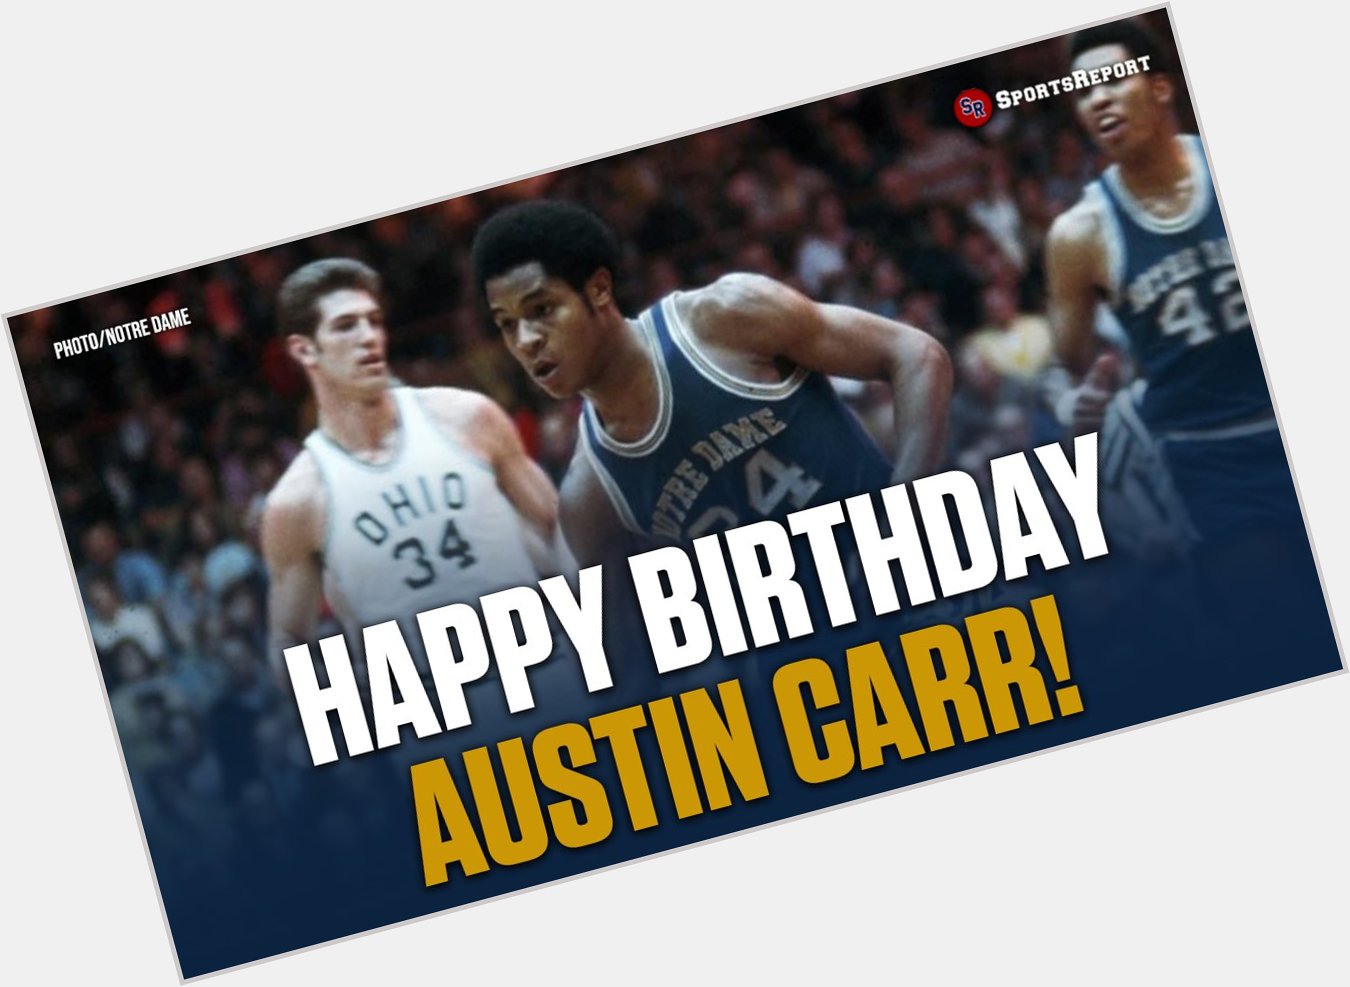  Fans, let\s wish Legend Austin Carr a Happy Birthday! 